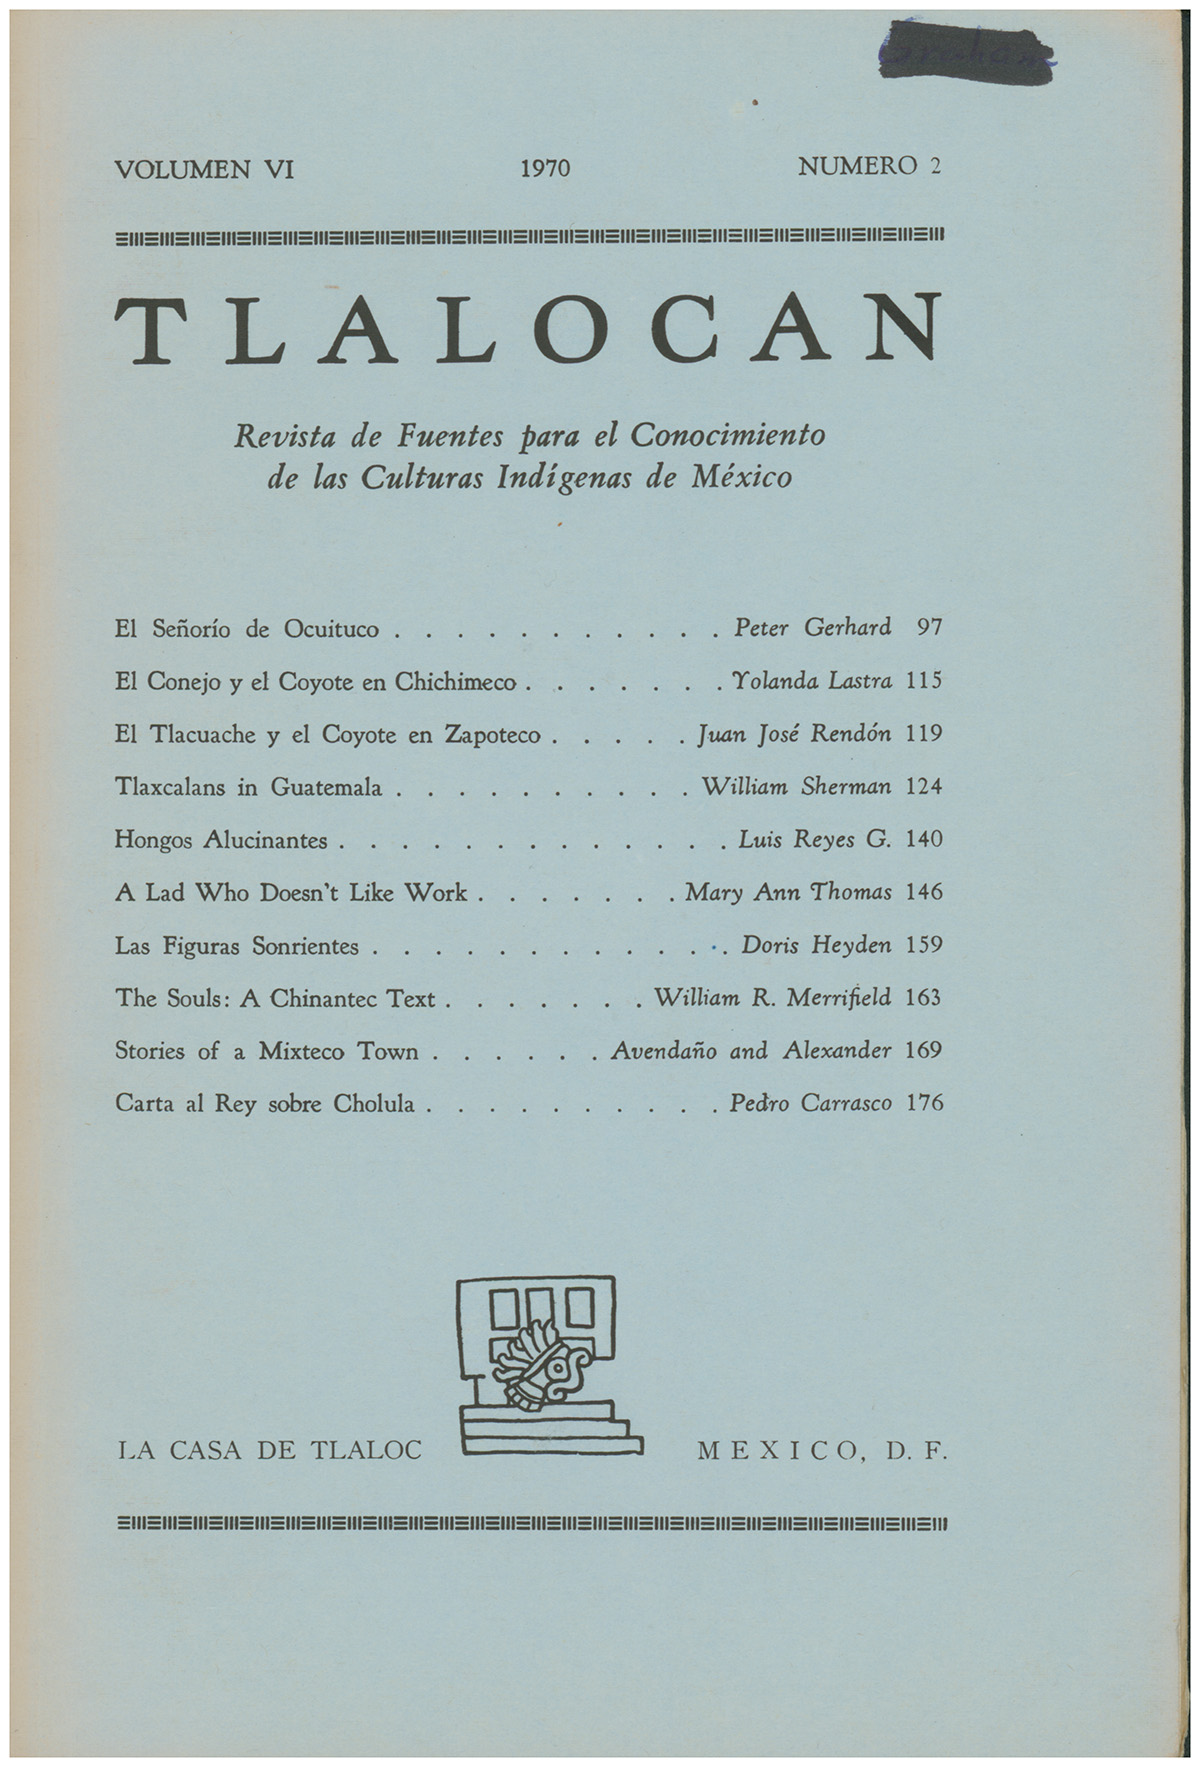 Bernal, Ignacio (editor) - Tlalocan: A Journal of Source Materials on the Native Cultures of Mexico (Vol VI, 1970, Numero 1)